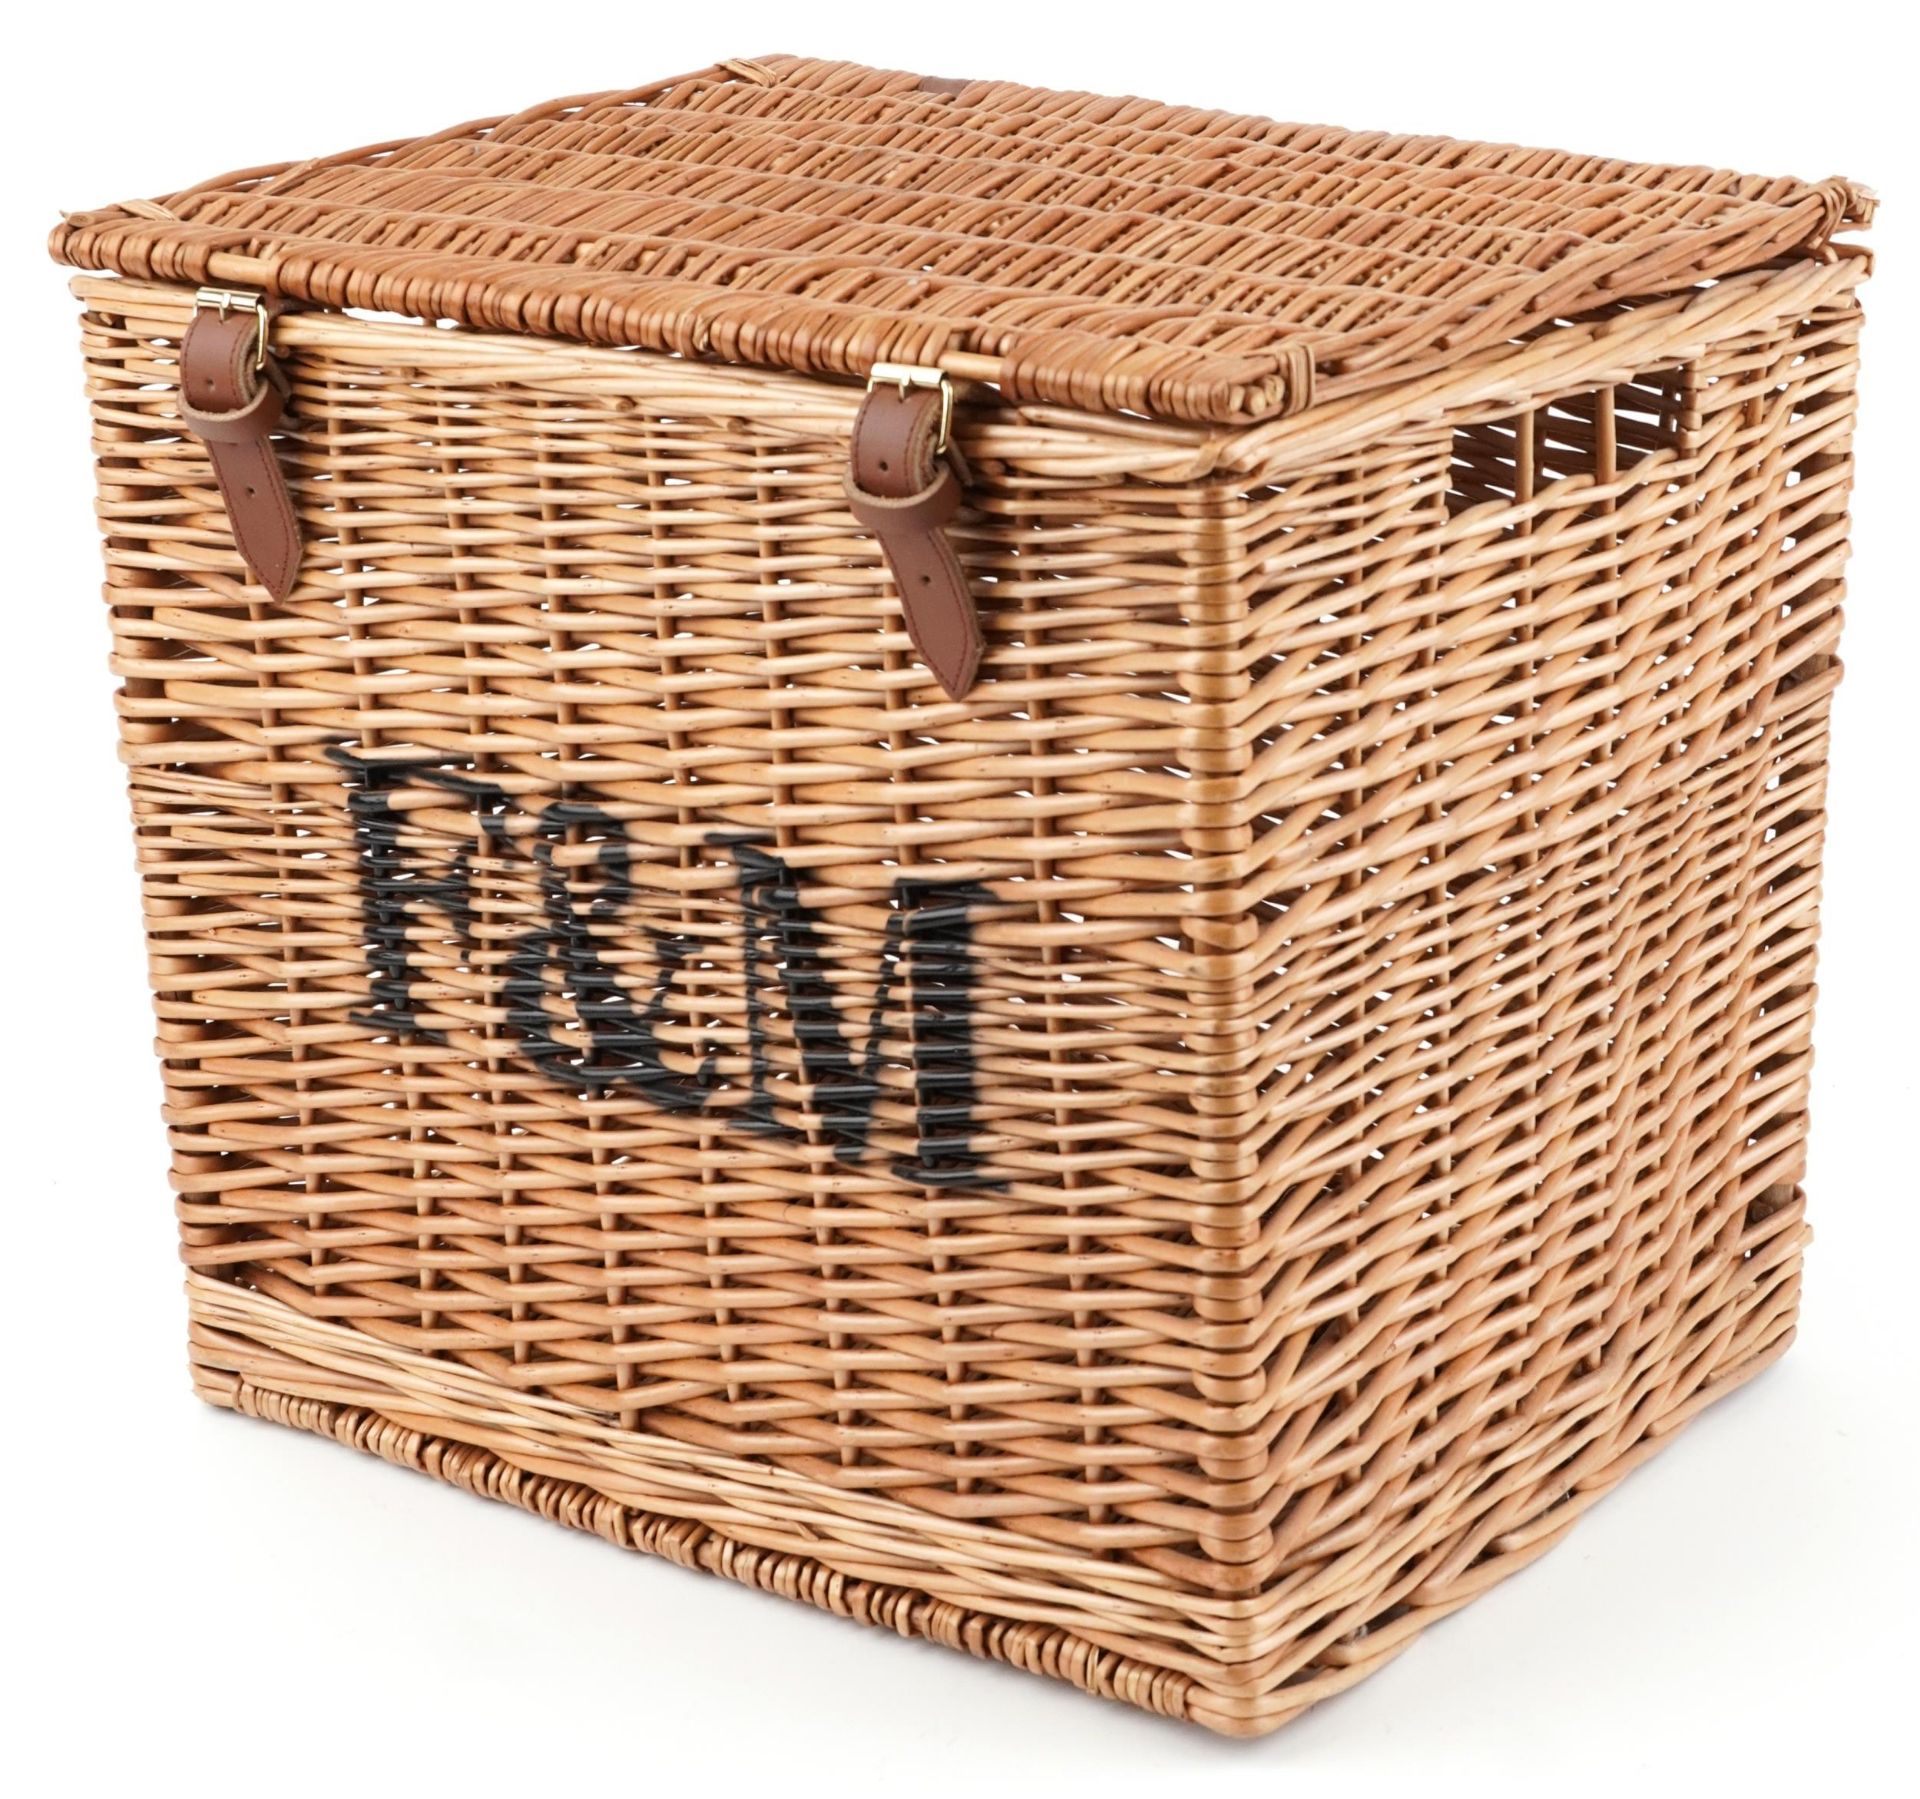 Fortnum & Mason advertising wicker basket, 42.5cm H x 46.5cm W x 37cm D